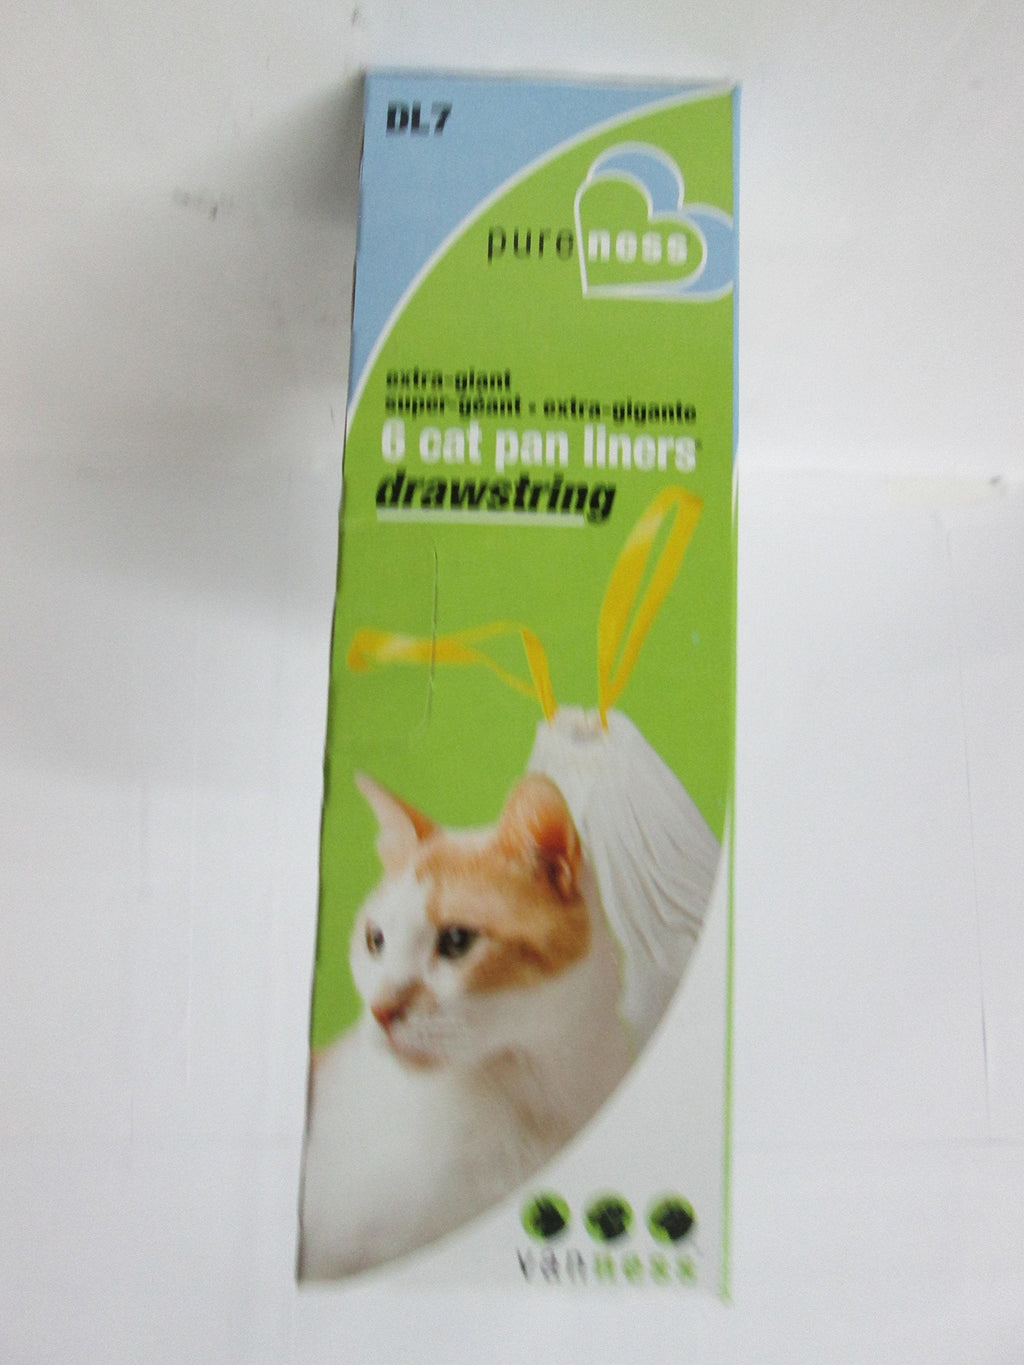 [Australia] - Pure-Ness Drawstring Cat Pan Liners 